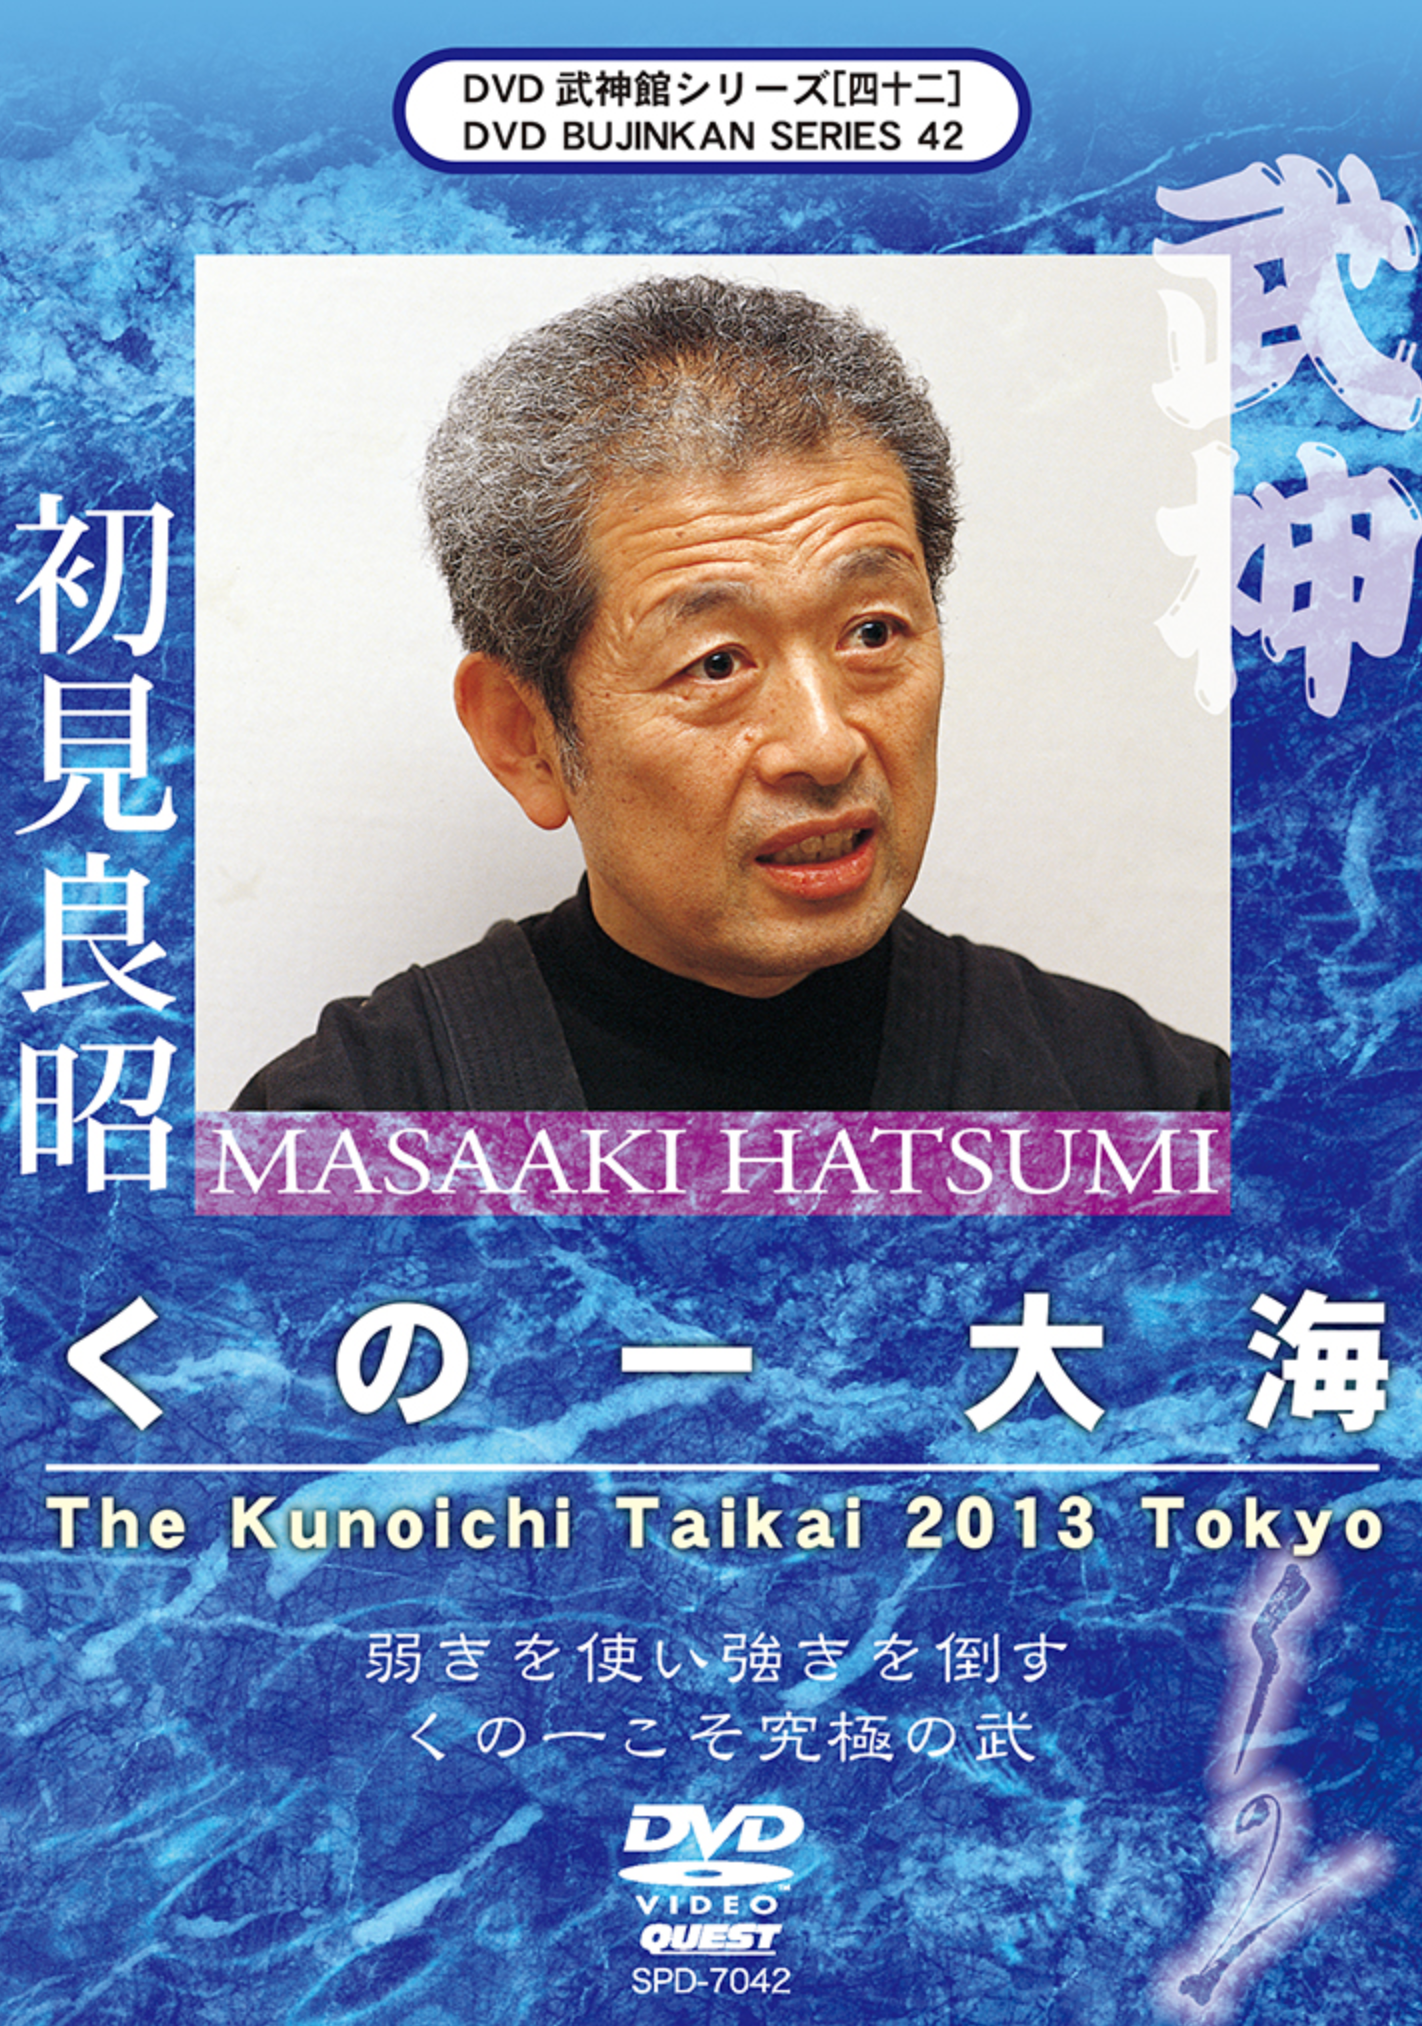 Bujinkan DVD Series 42: Kunoichi Taikai with Masaaki Hatsumi - Budovideos Inc